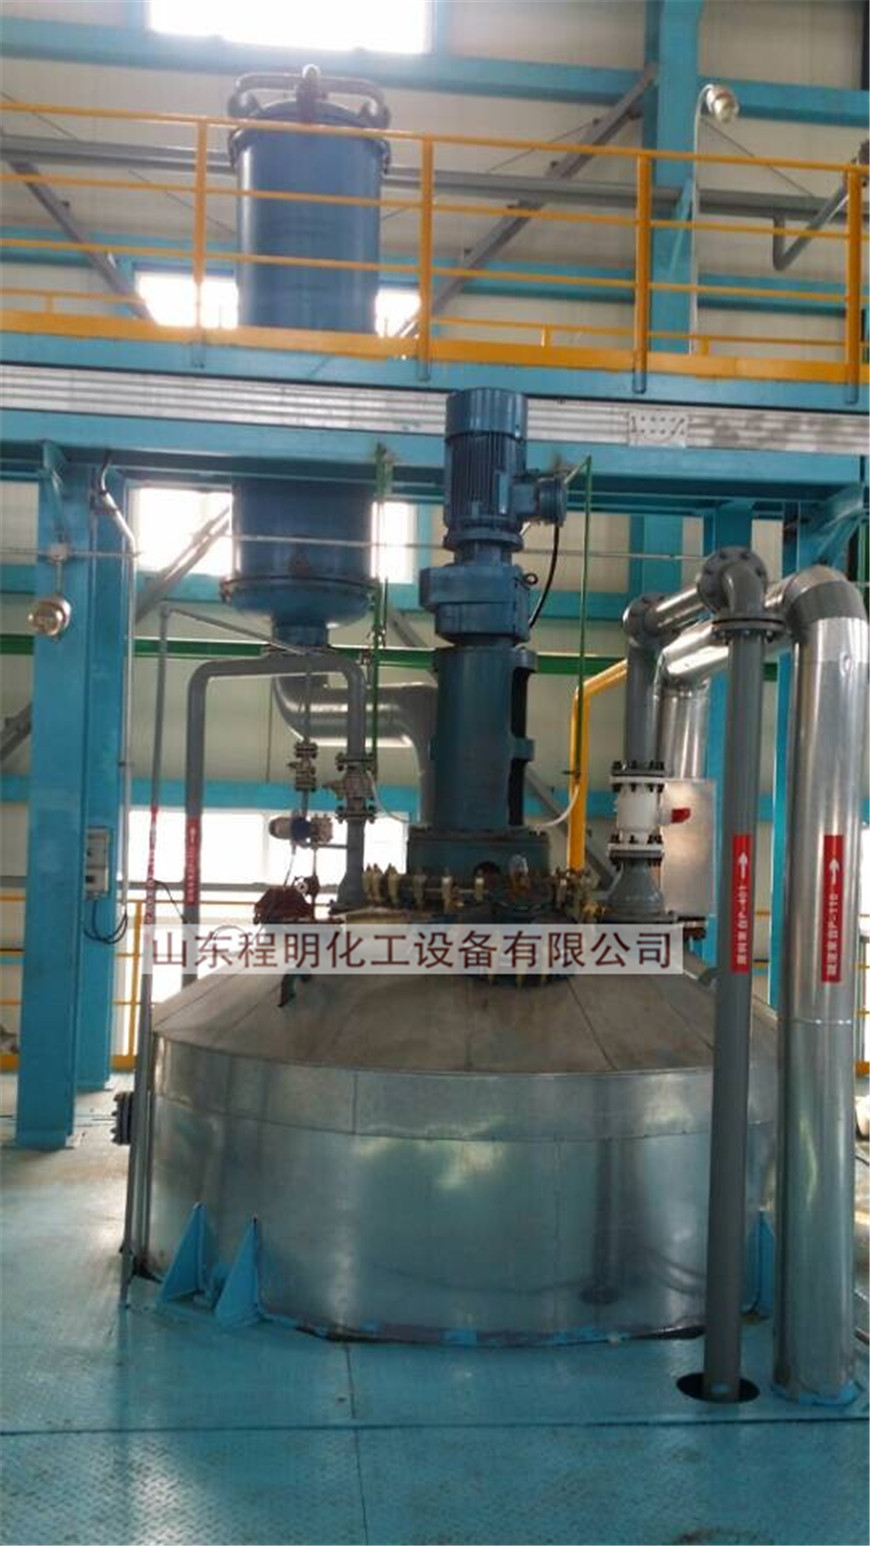 Chemical workhouse in Jinzhou